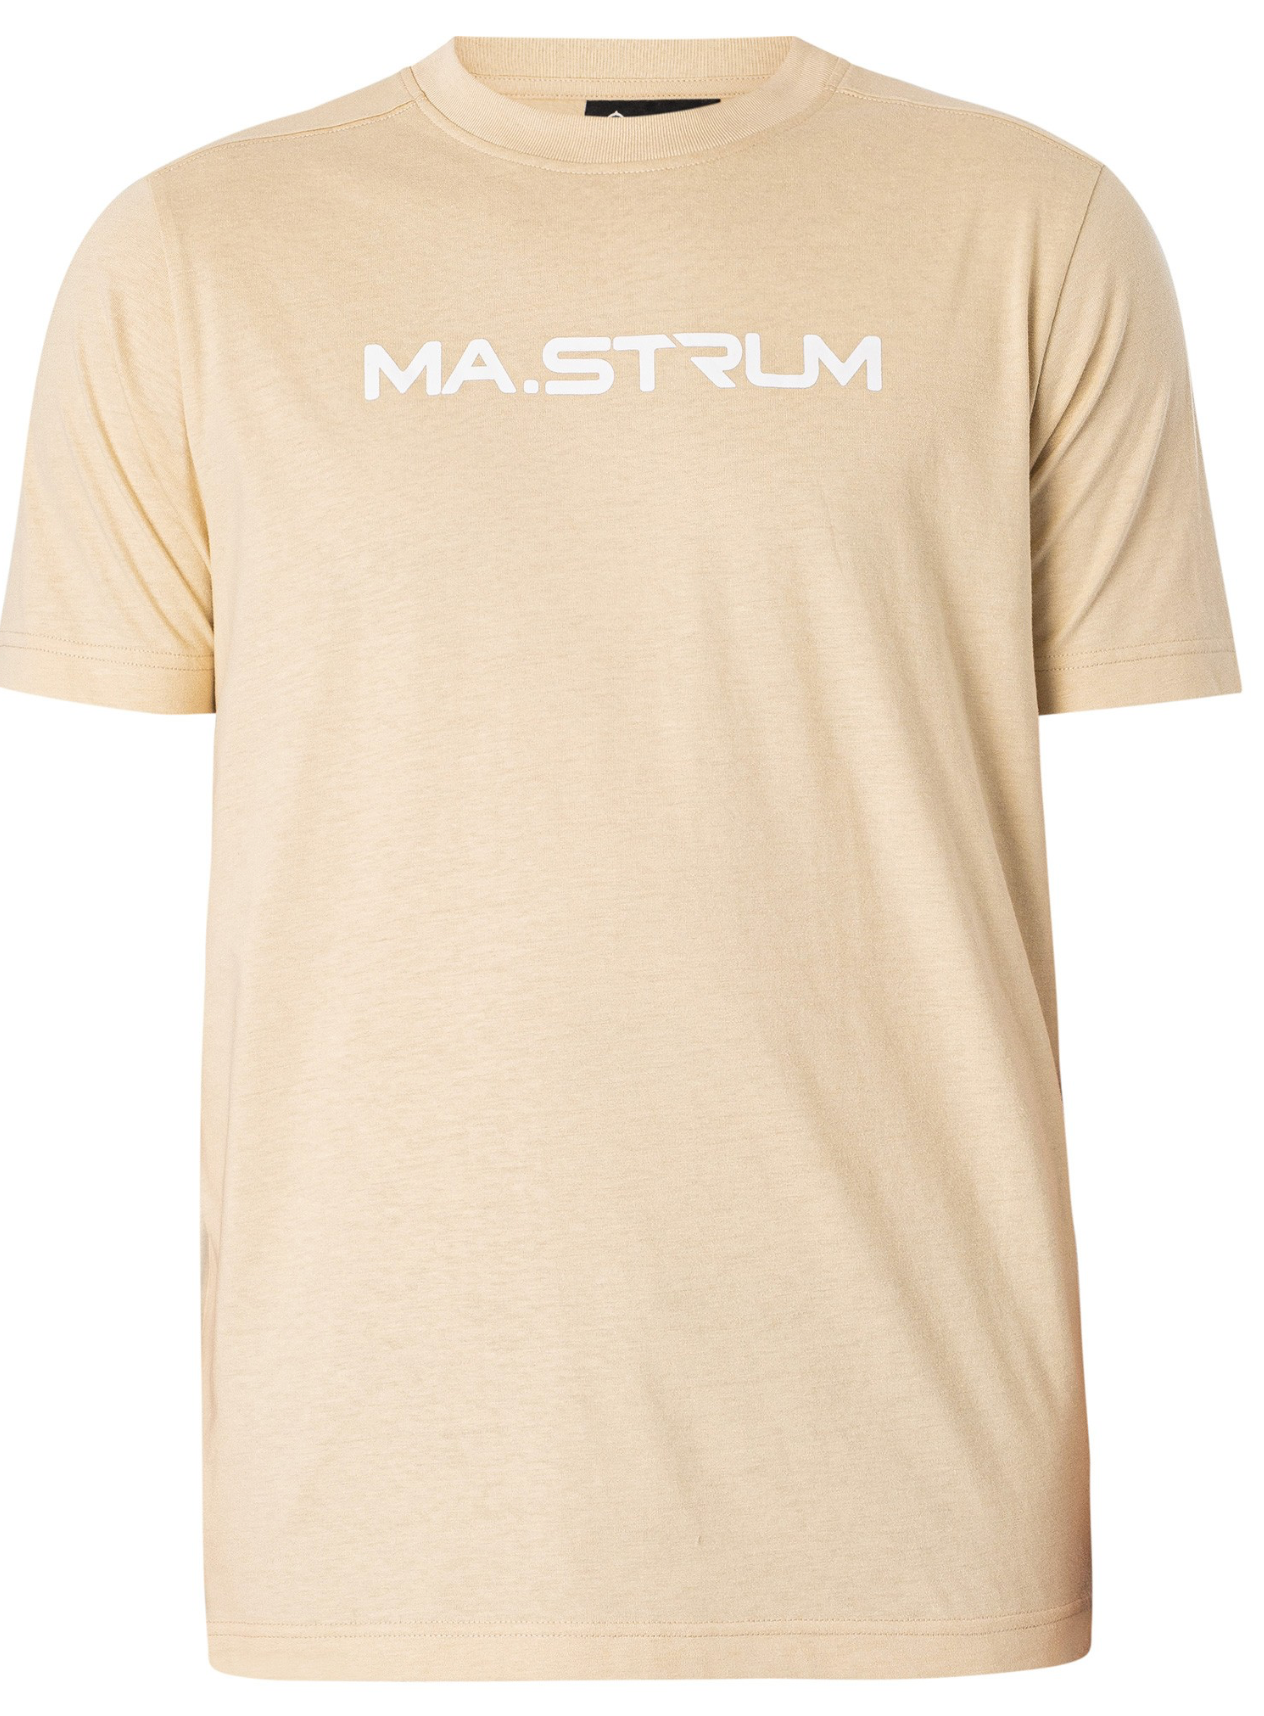 MA. Strum Chest Print T-Shirt Ash